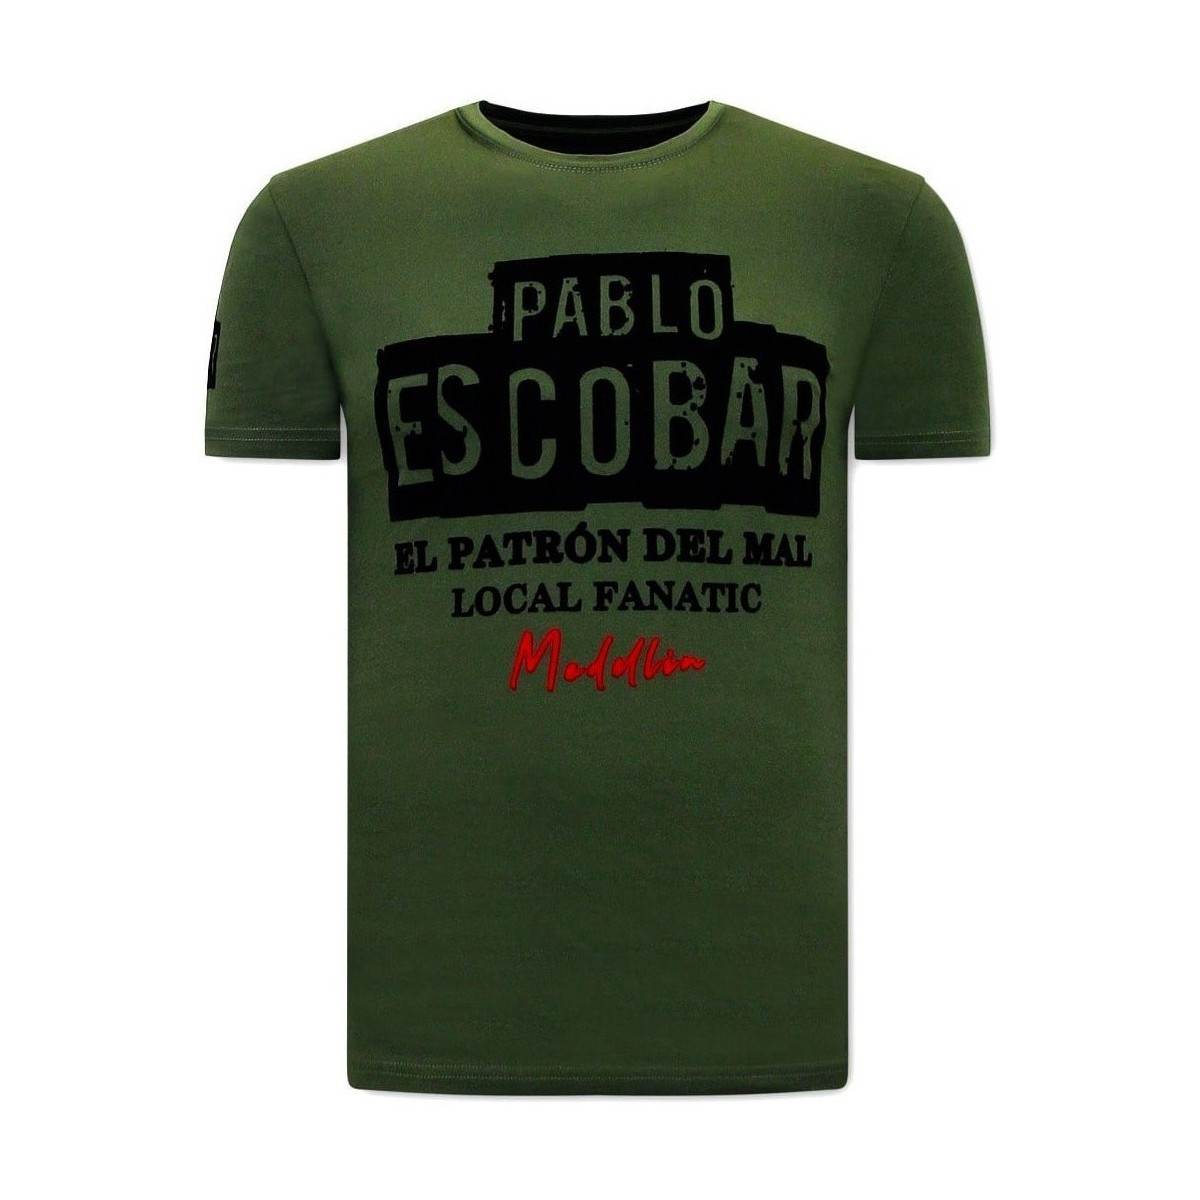 textil Herr T-shirts Local Fanatic Pablo Escobar Grön